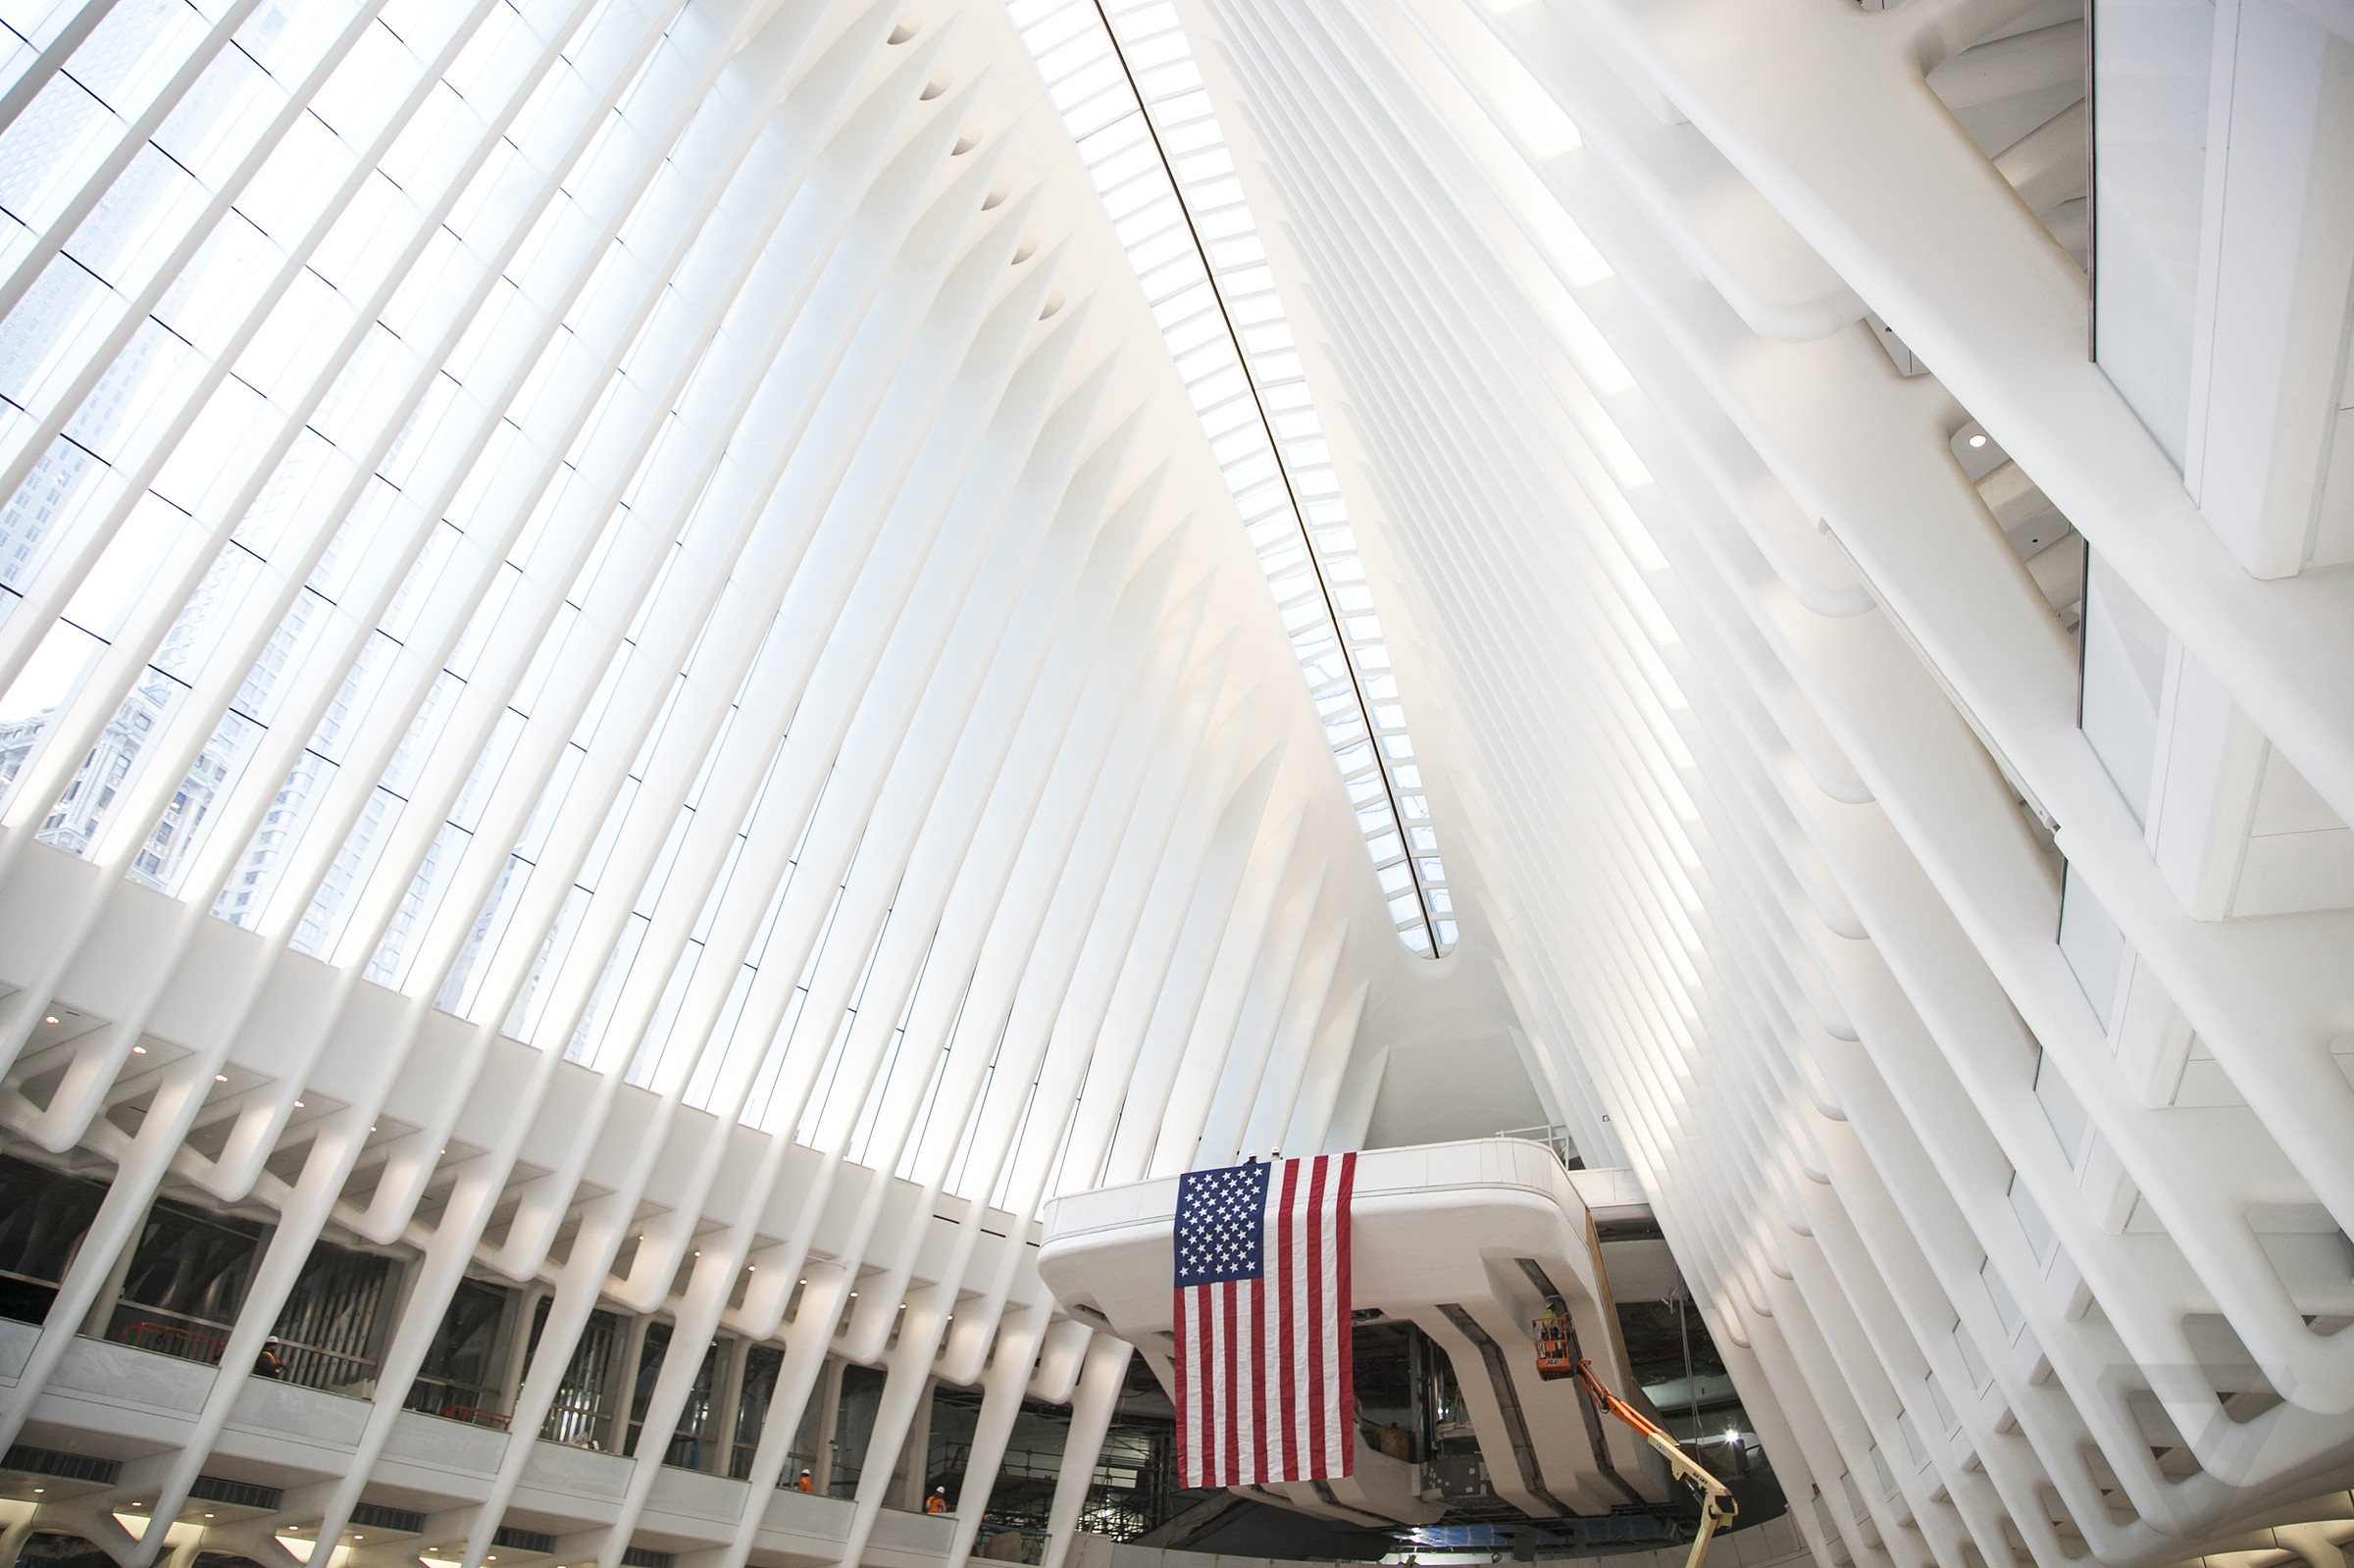 World Trade Center Transit Hub and Oculus